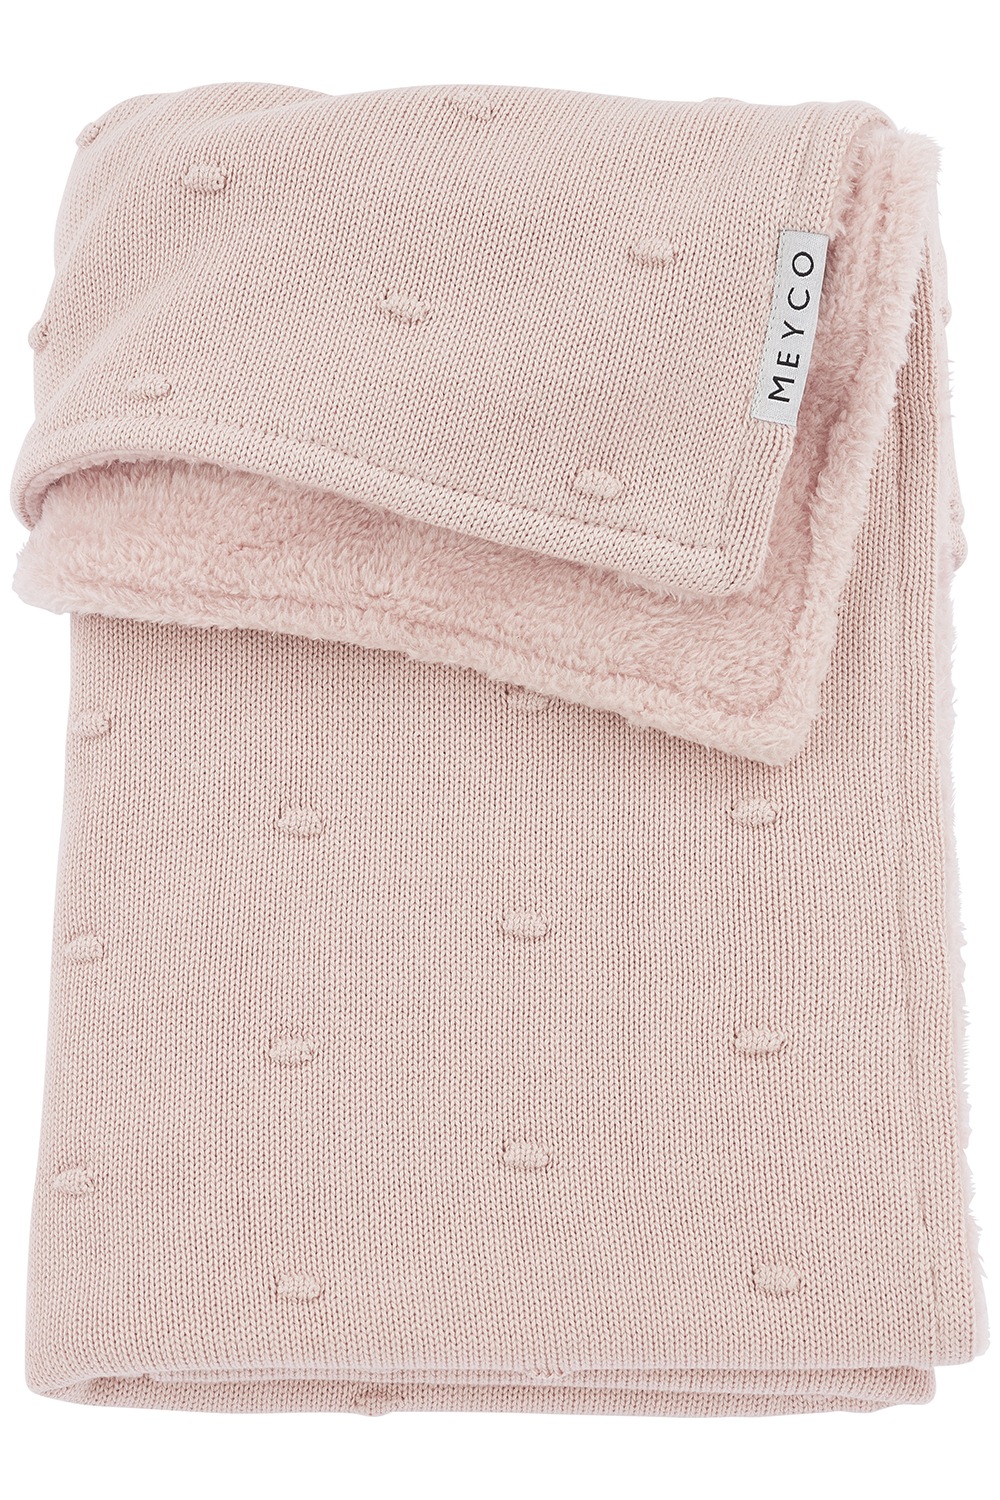 Crib bed blanket Mini Knots teddy - soft pink - 75x100cm